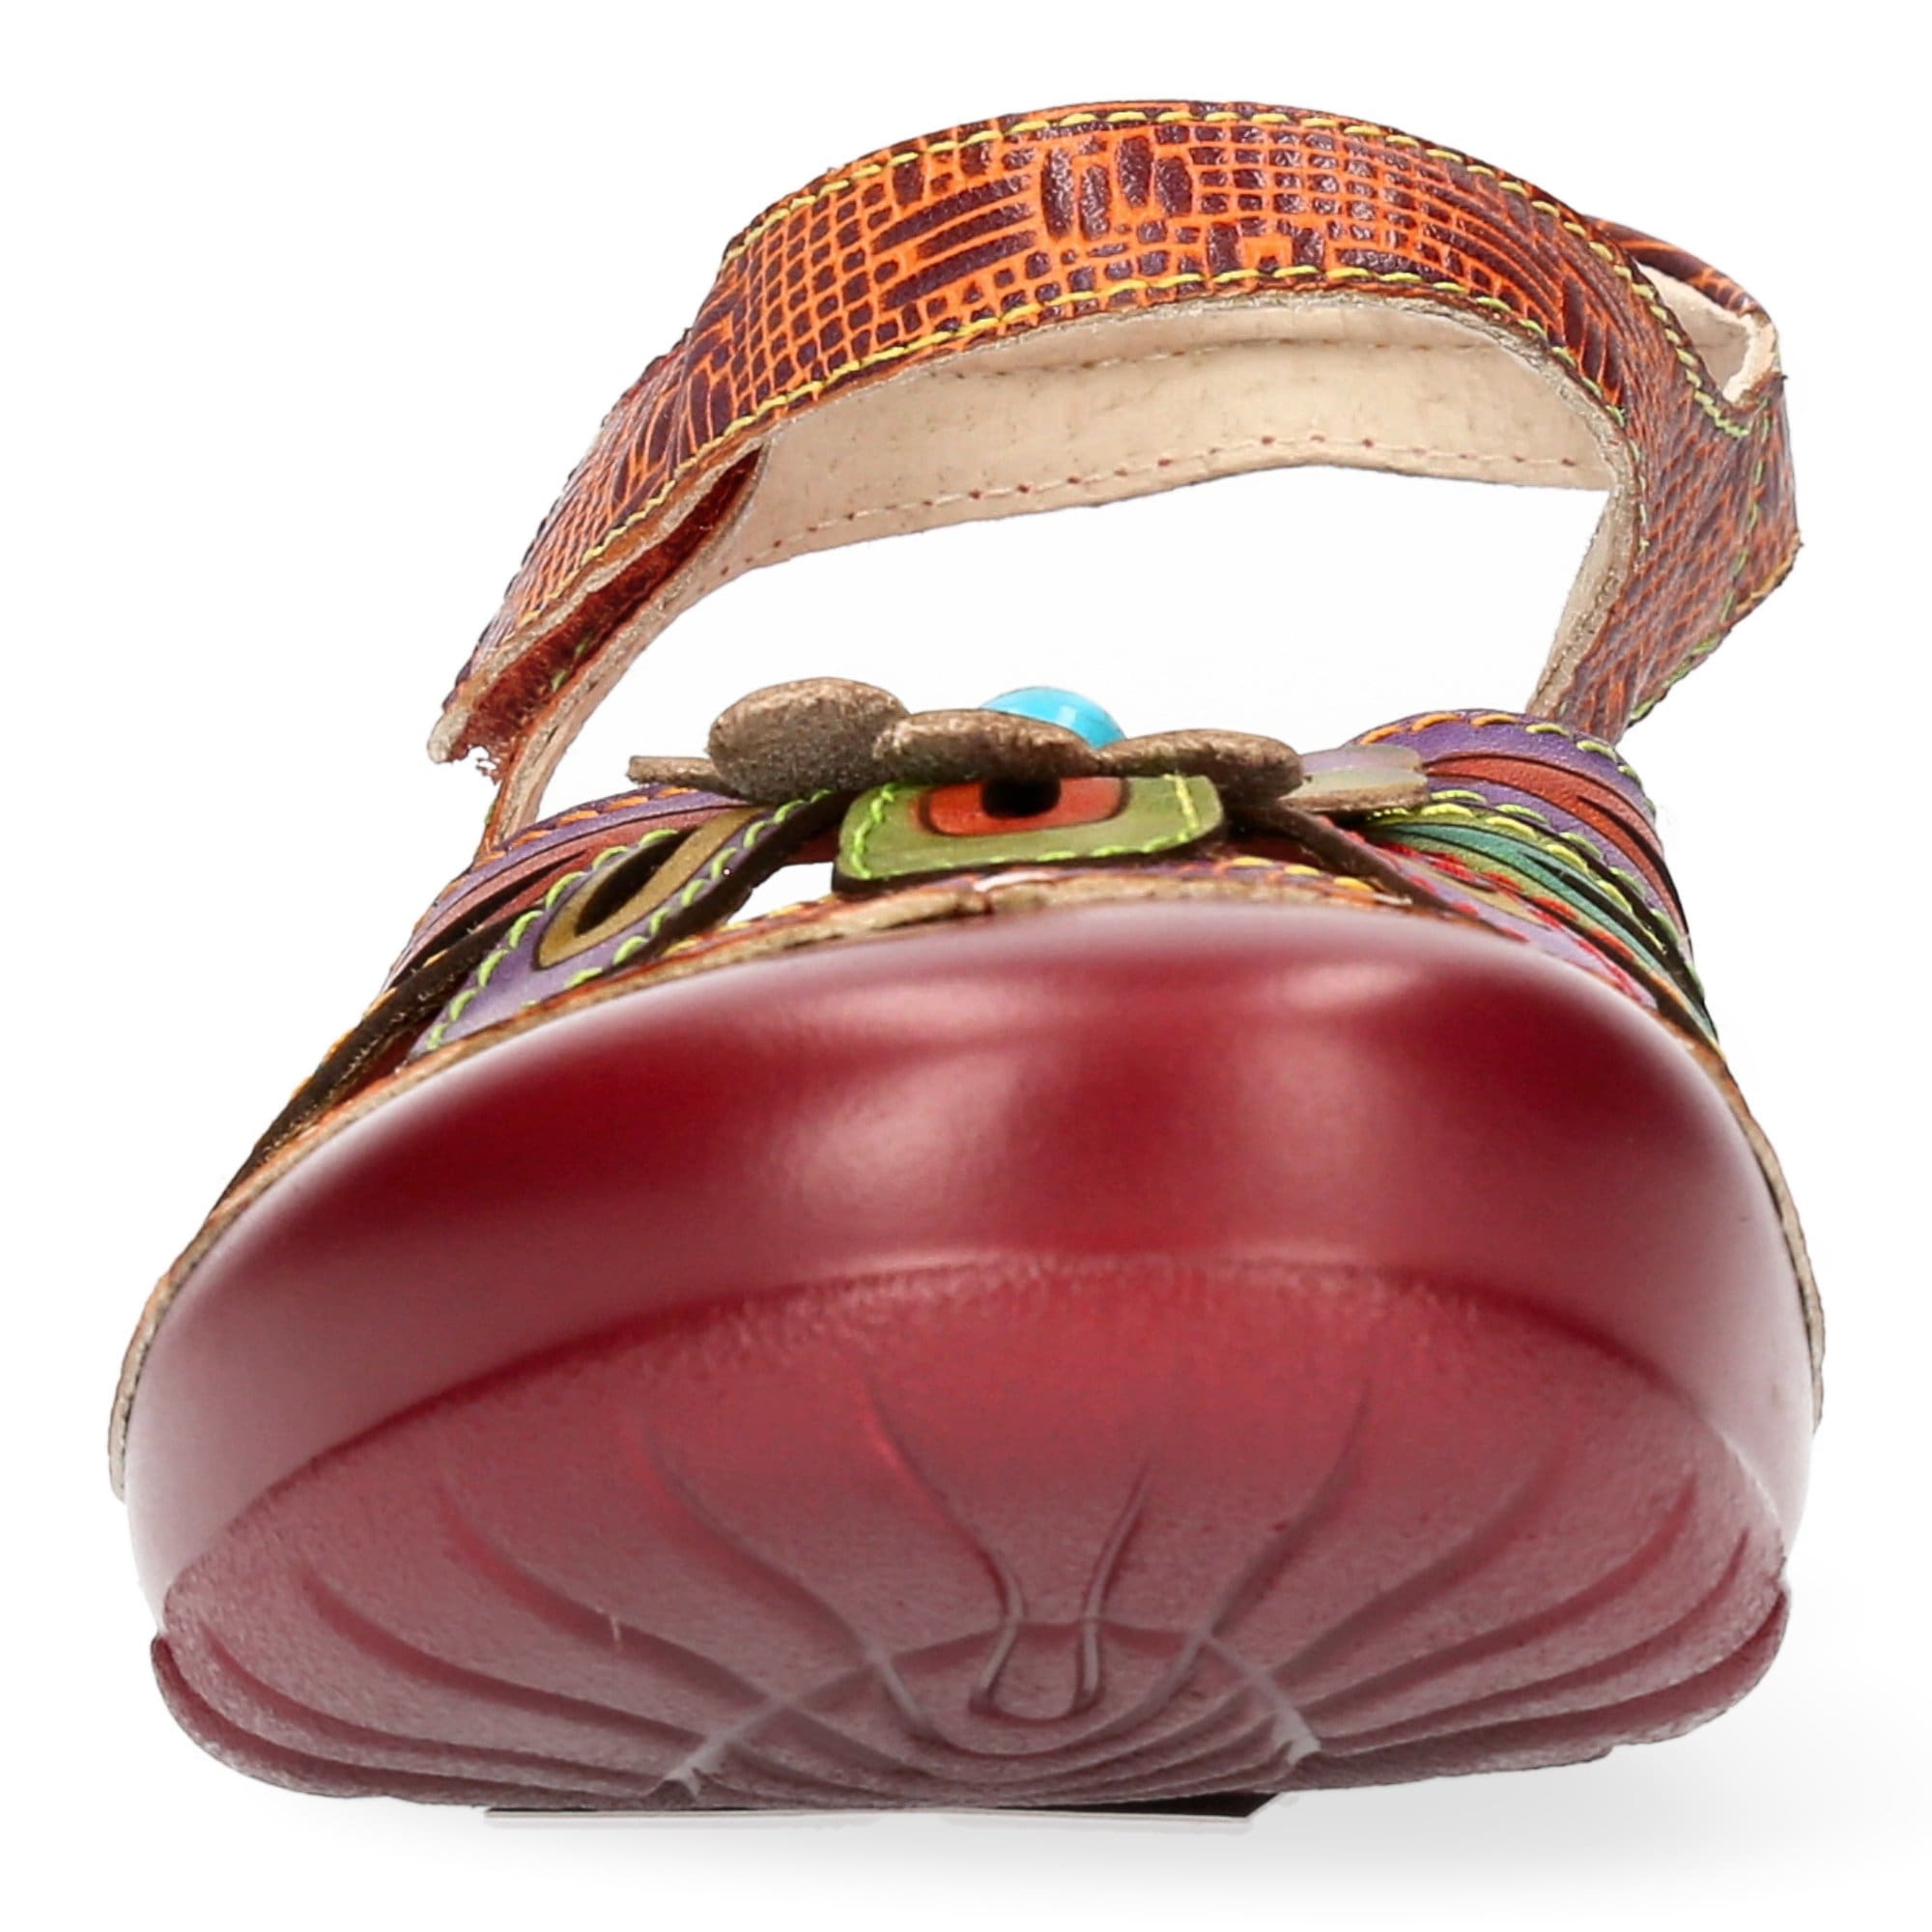 BECZIERSO 12 shoes - Sandal